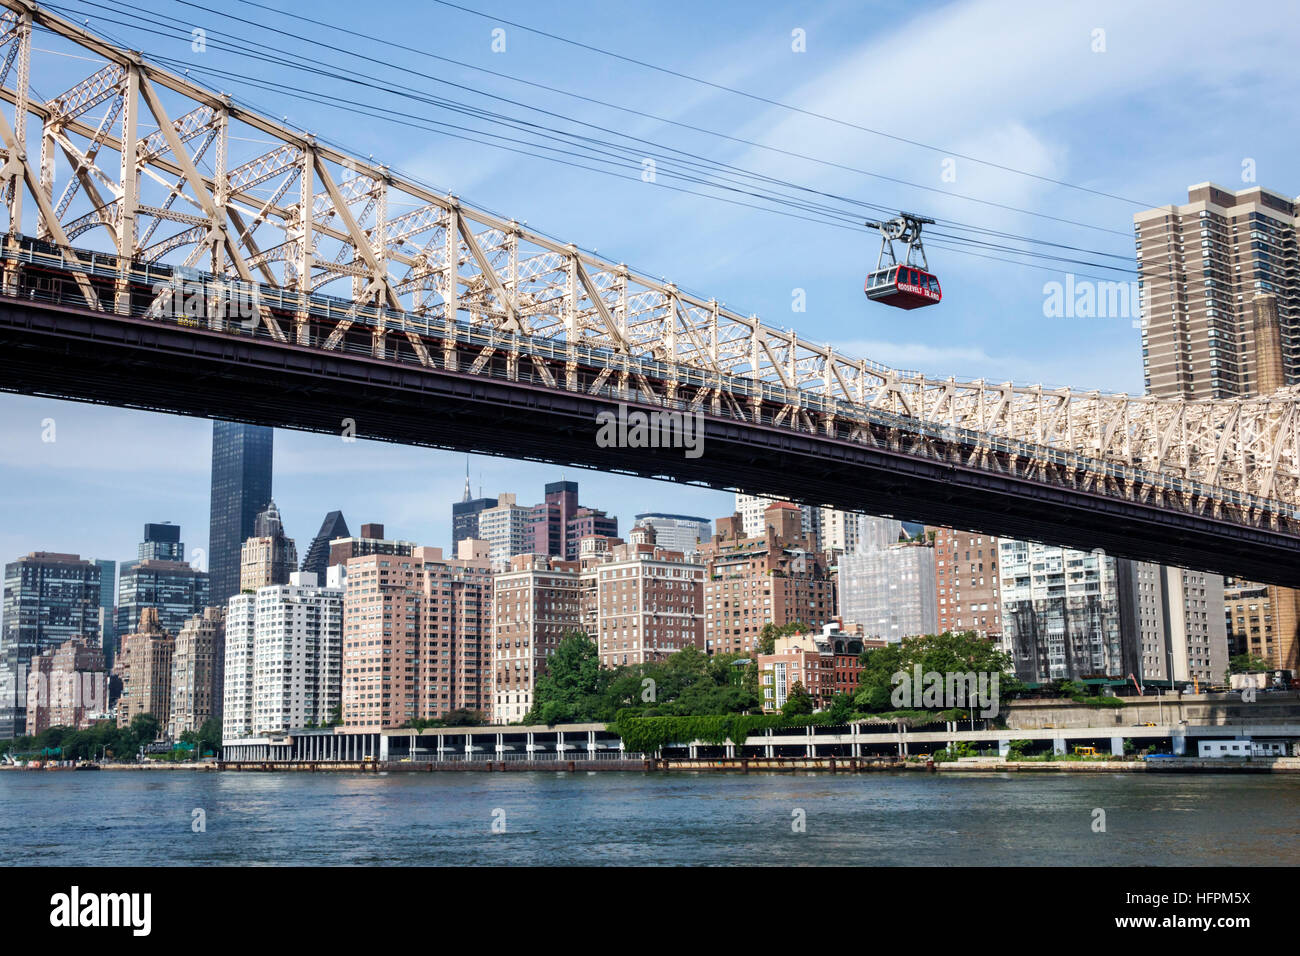 New York, NY NYC East River, Roosevelt Island Tram, Manhattan Skyline, tramway aérien de banlieue, Ed Koch Queensboro Bridge, NY160723005 Banque D'Images